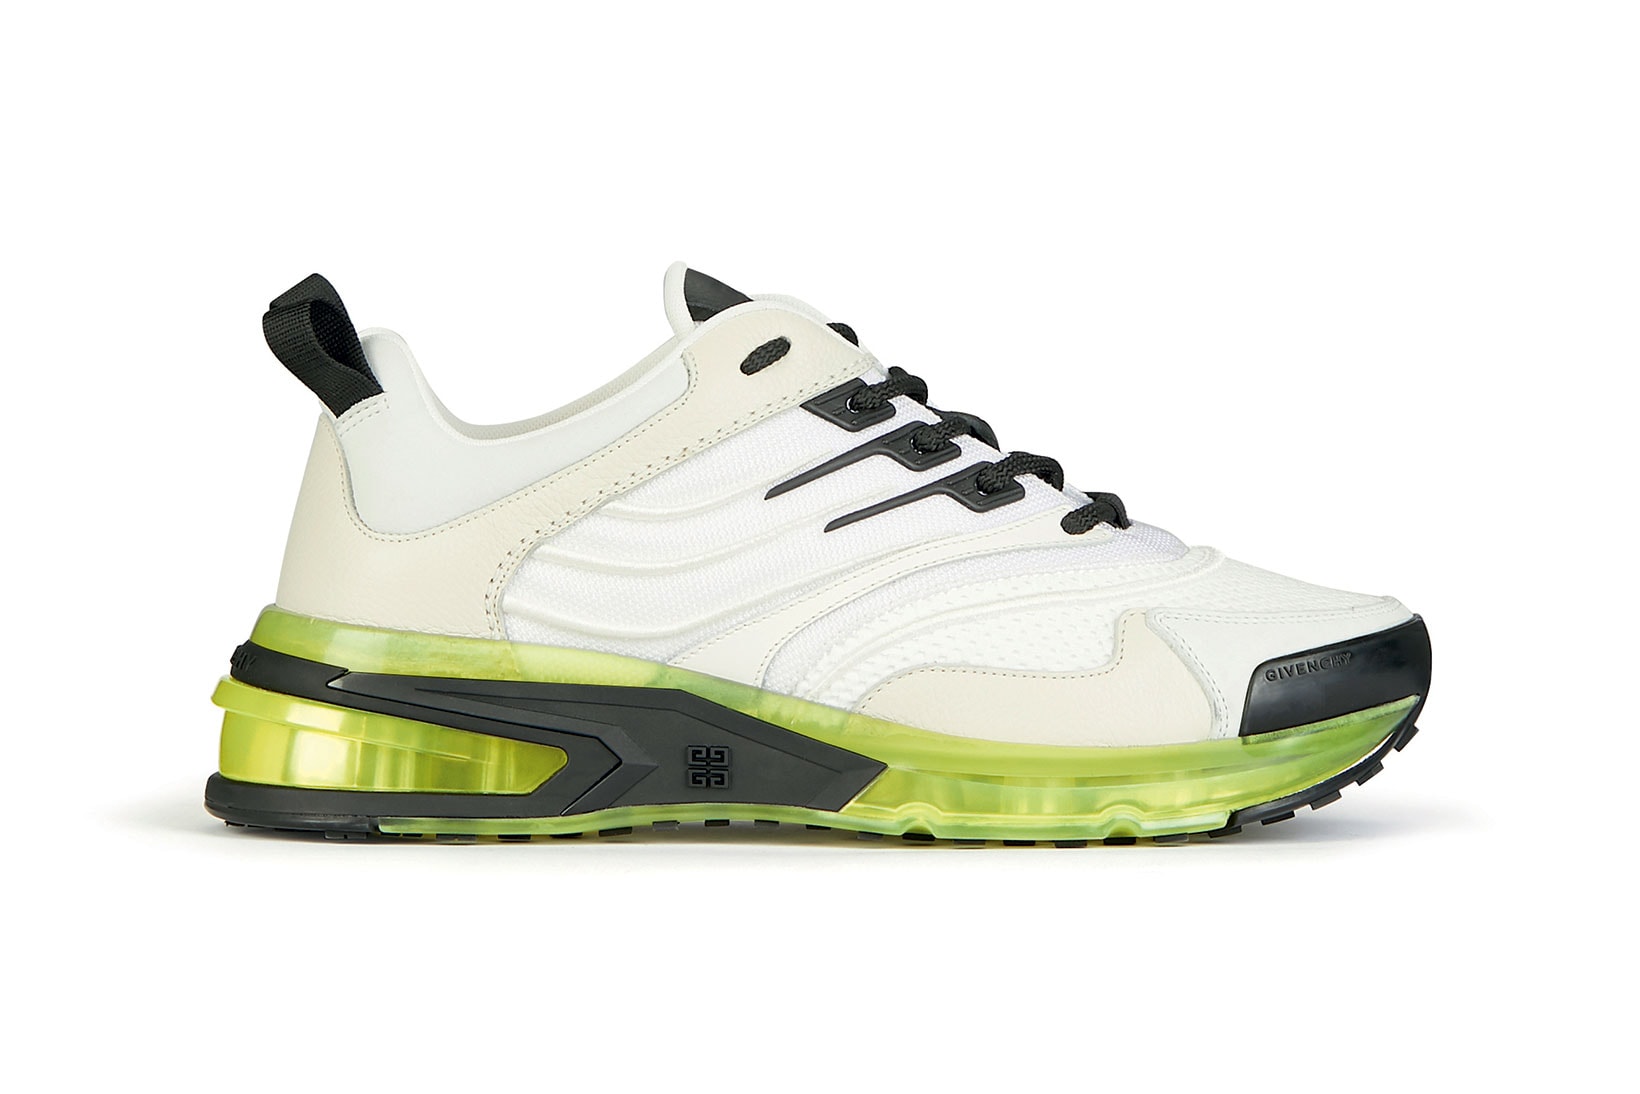 givenchy giv 1 unisex sneakers black white neon green matthew m williams shoes kicks sneakerhead footwear lateral